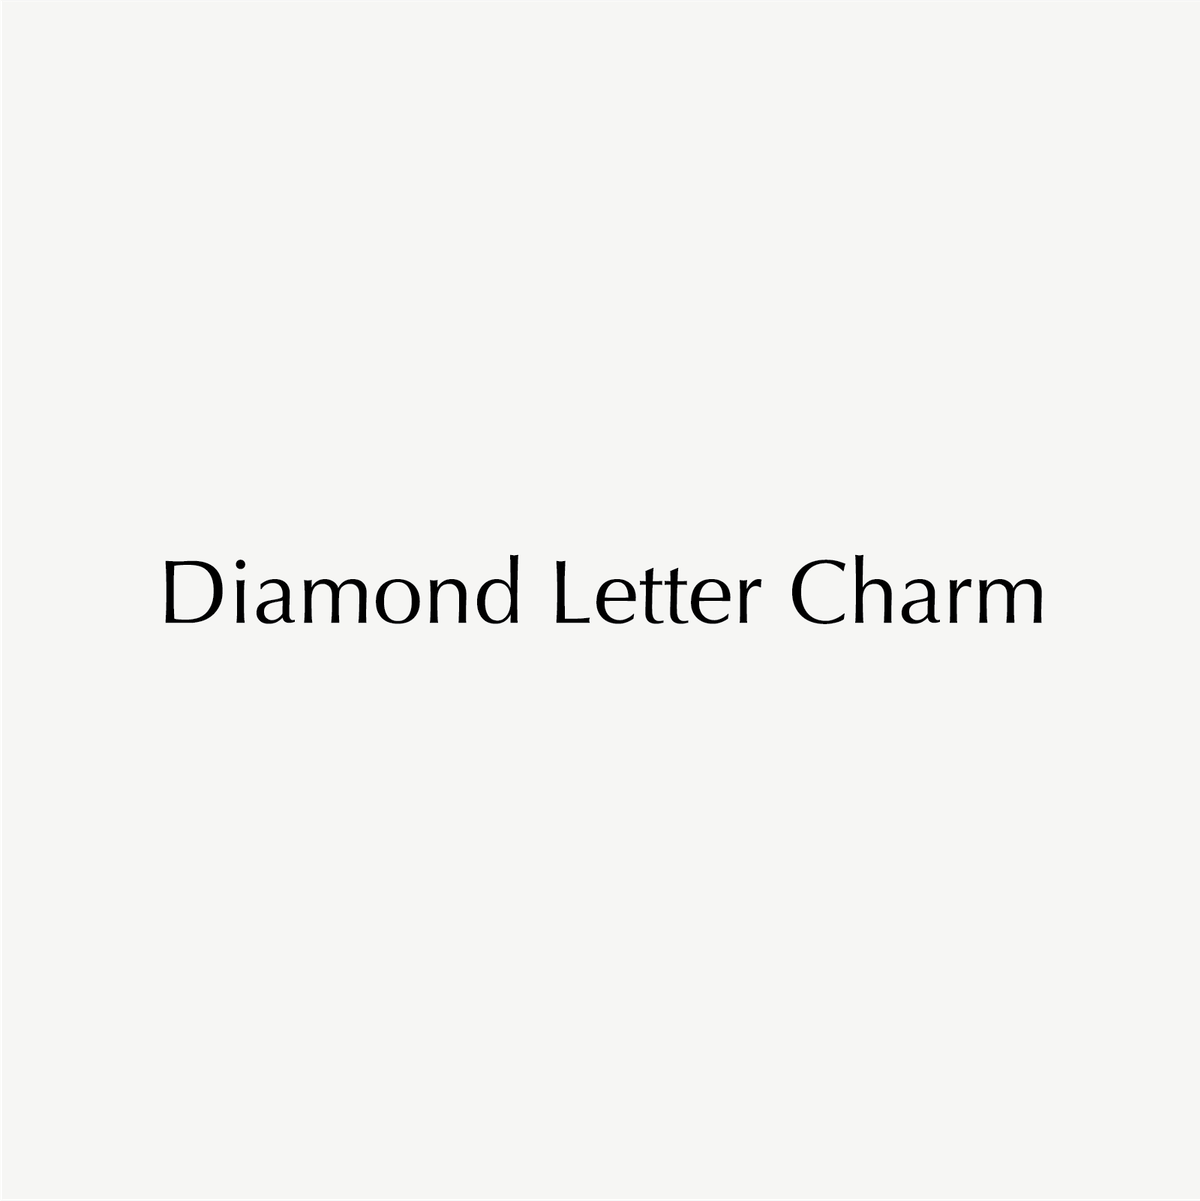 Diamond Letter Charm text